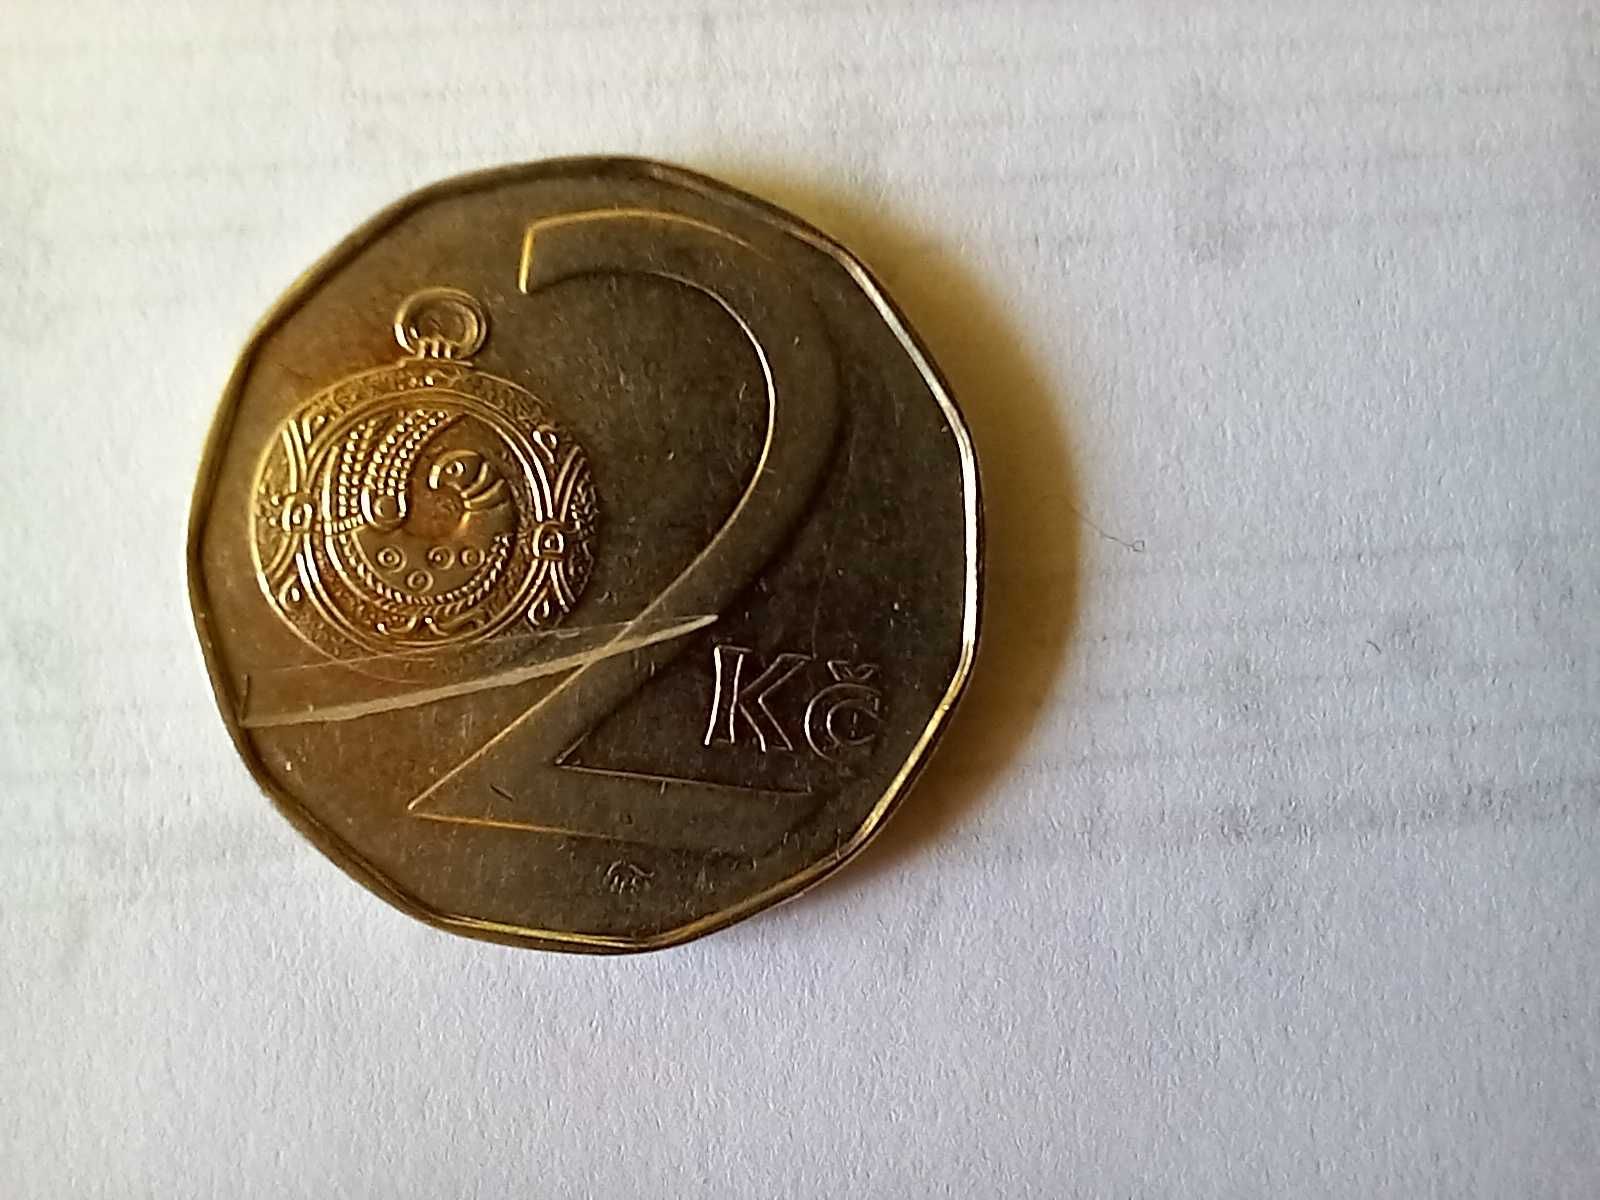 Moneta Czechy - 2 korony 1995 /6/